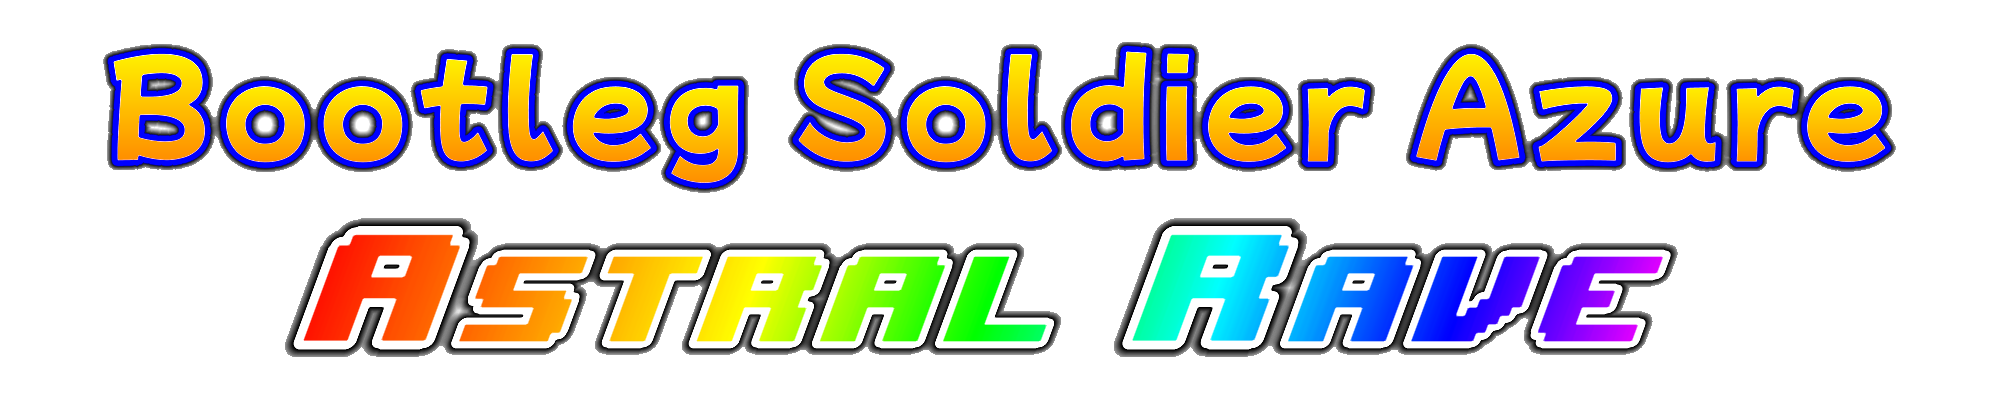 Bootleg Soldier Azure: ASTRAL RAVE